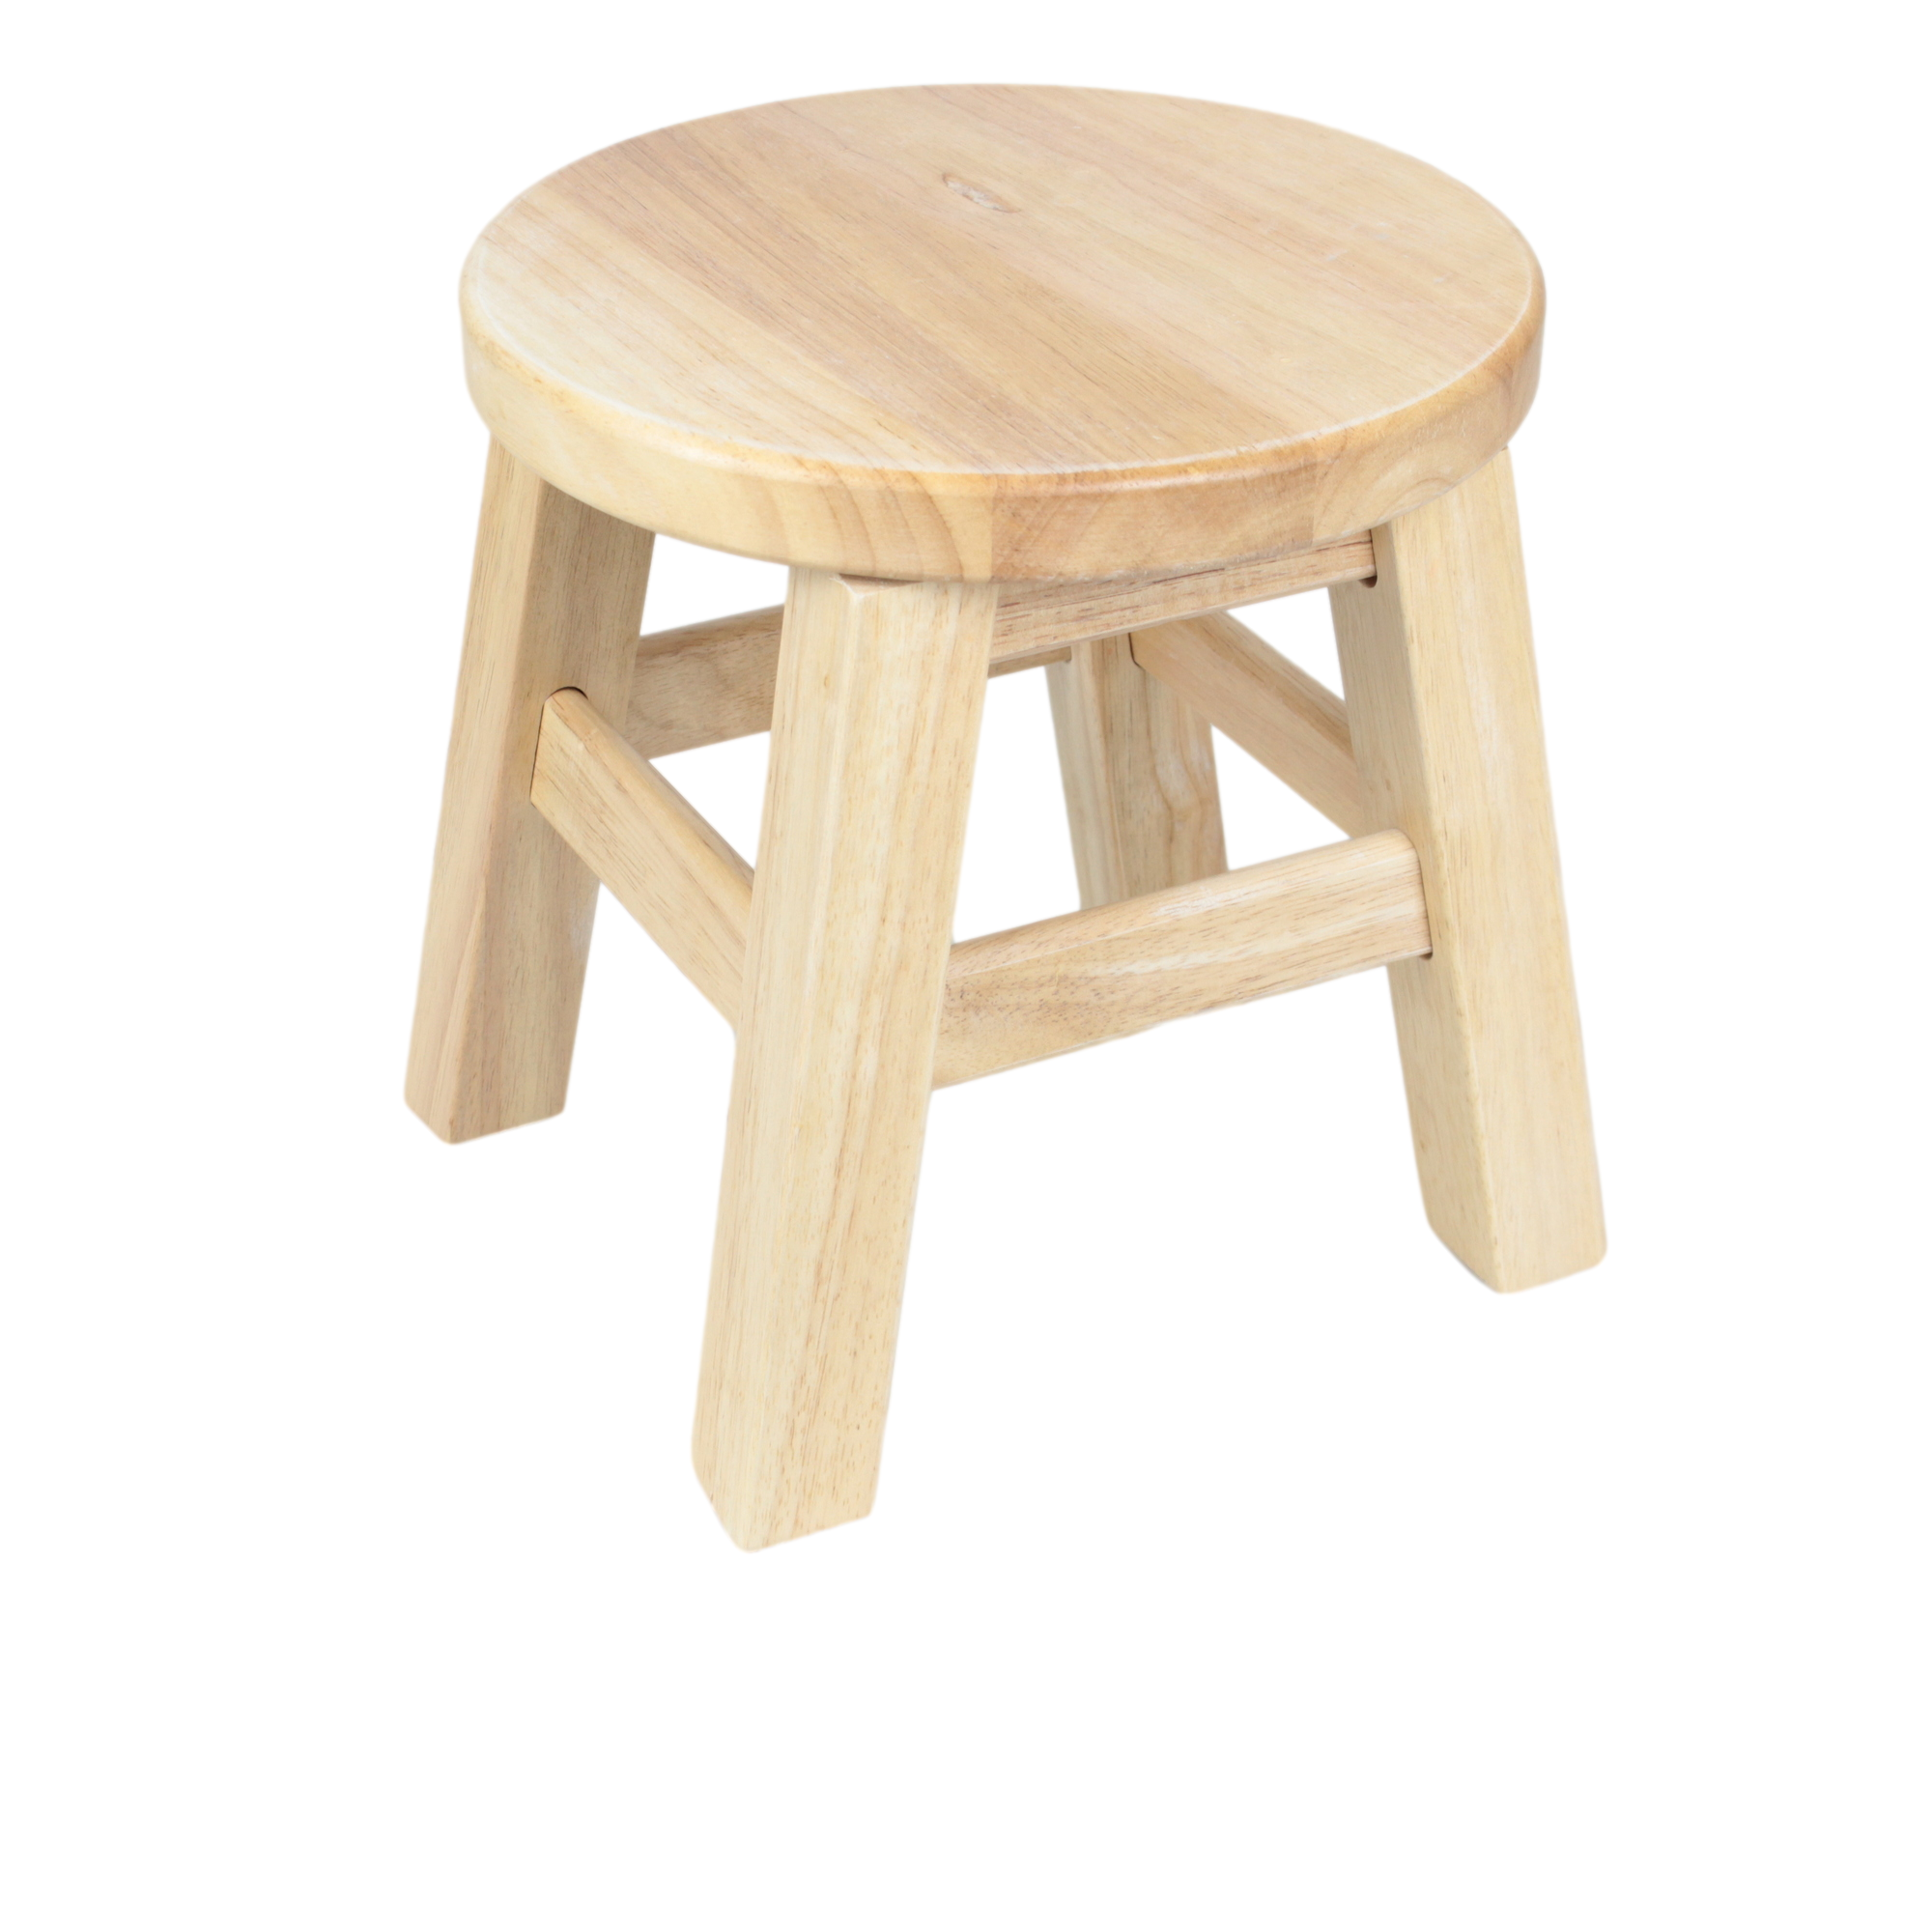 26cm Kiddie Round Chair Hevea Wood Step Stool